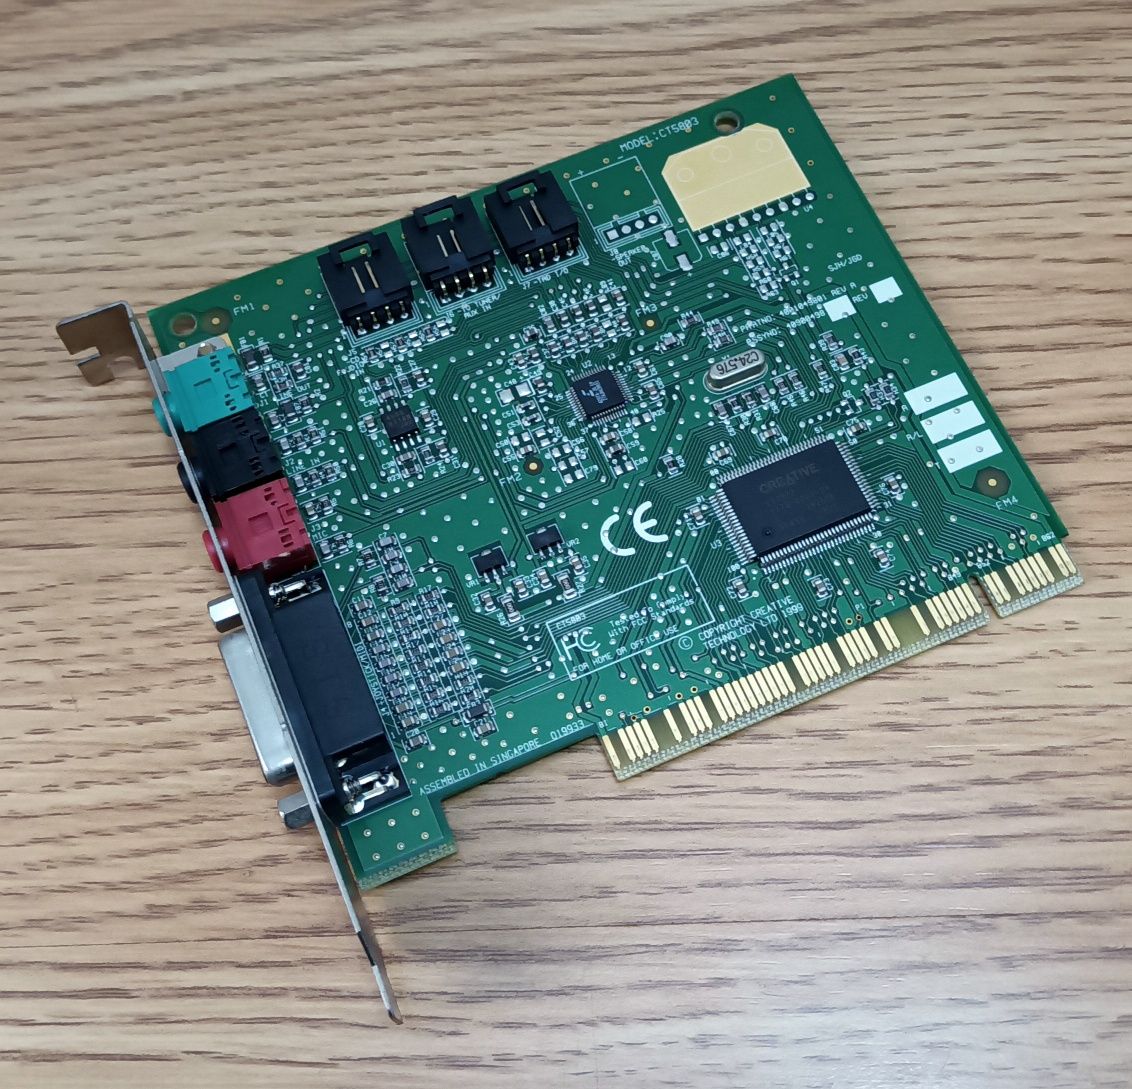 Placa de som antiga Creative Labs Sound Blaster 16 PCI CT5803